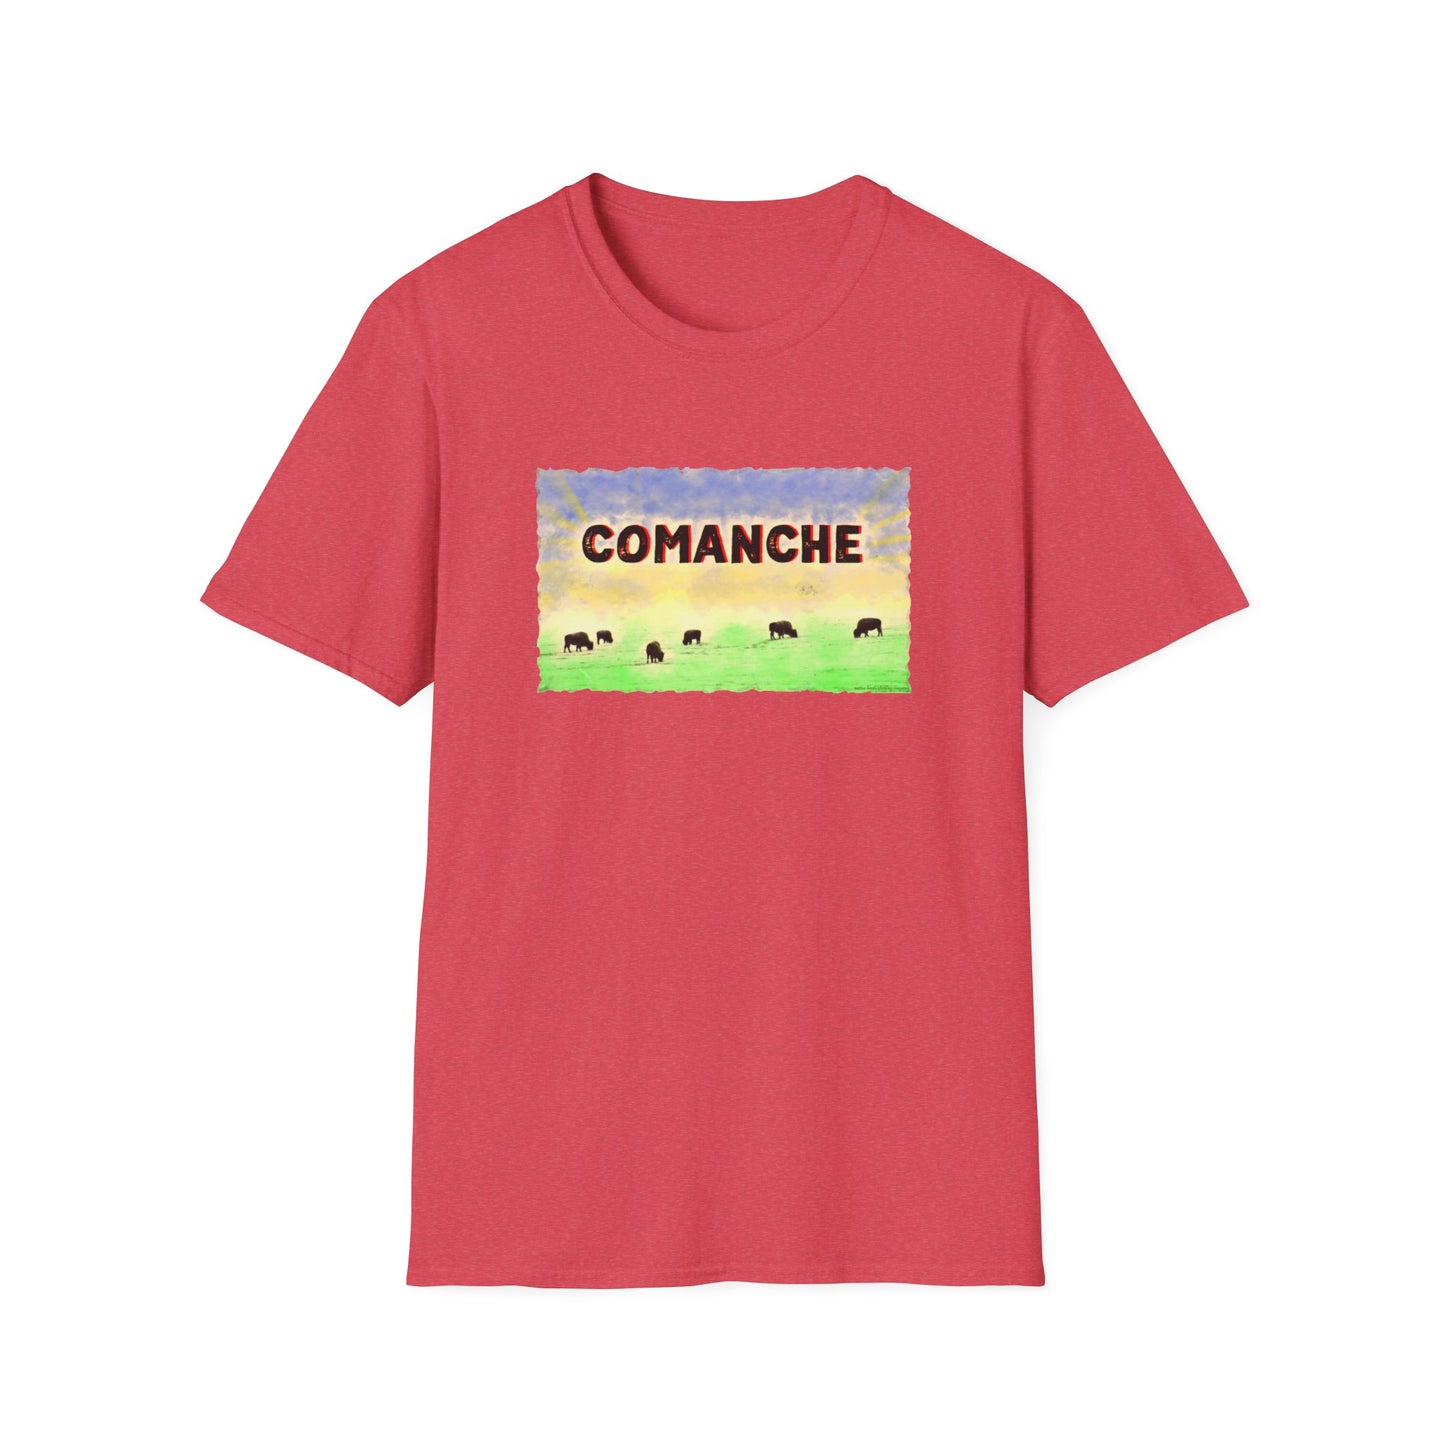 Comanche Tribe Shirt Baumwolle Indianer